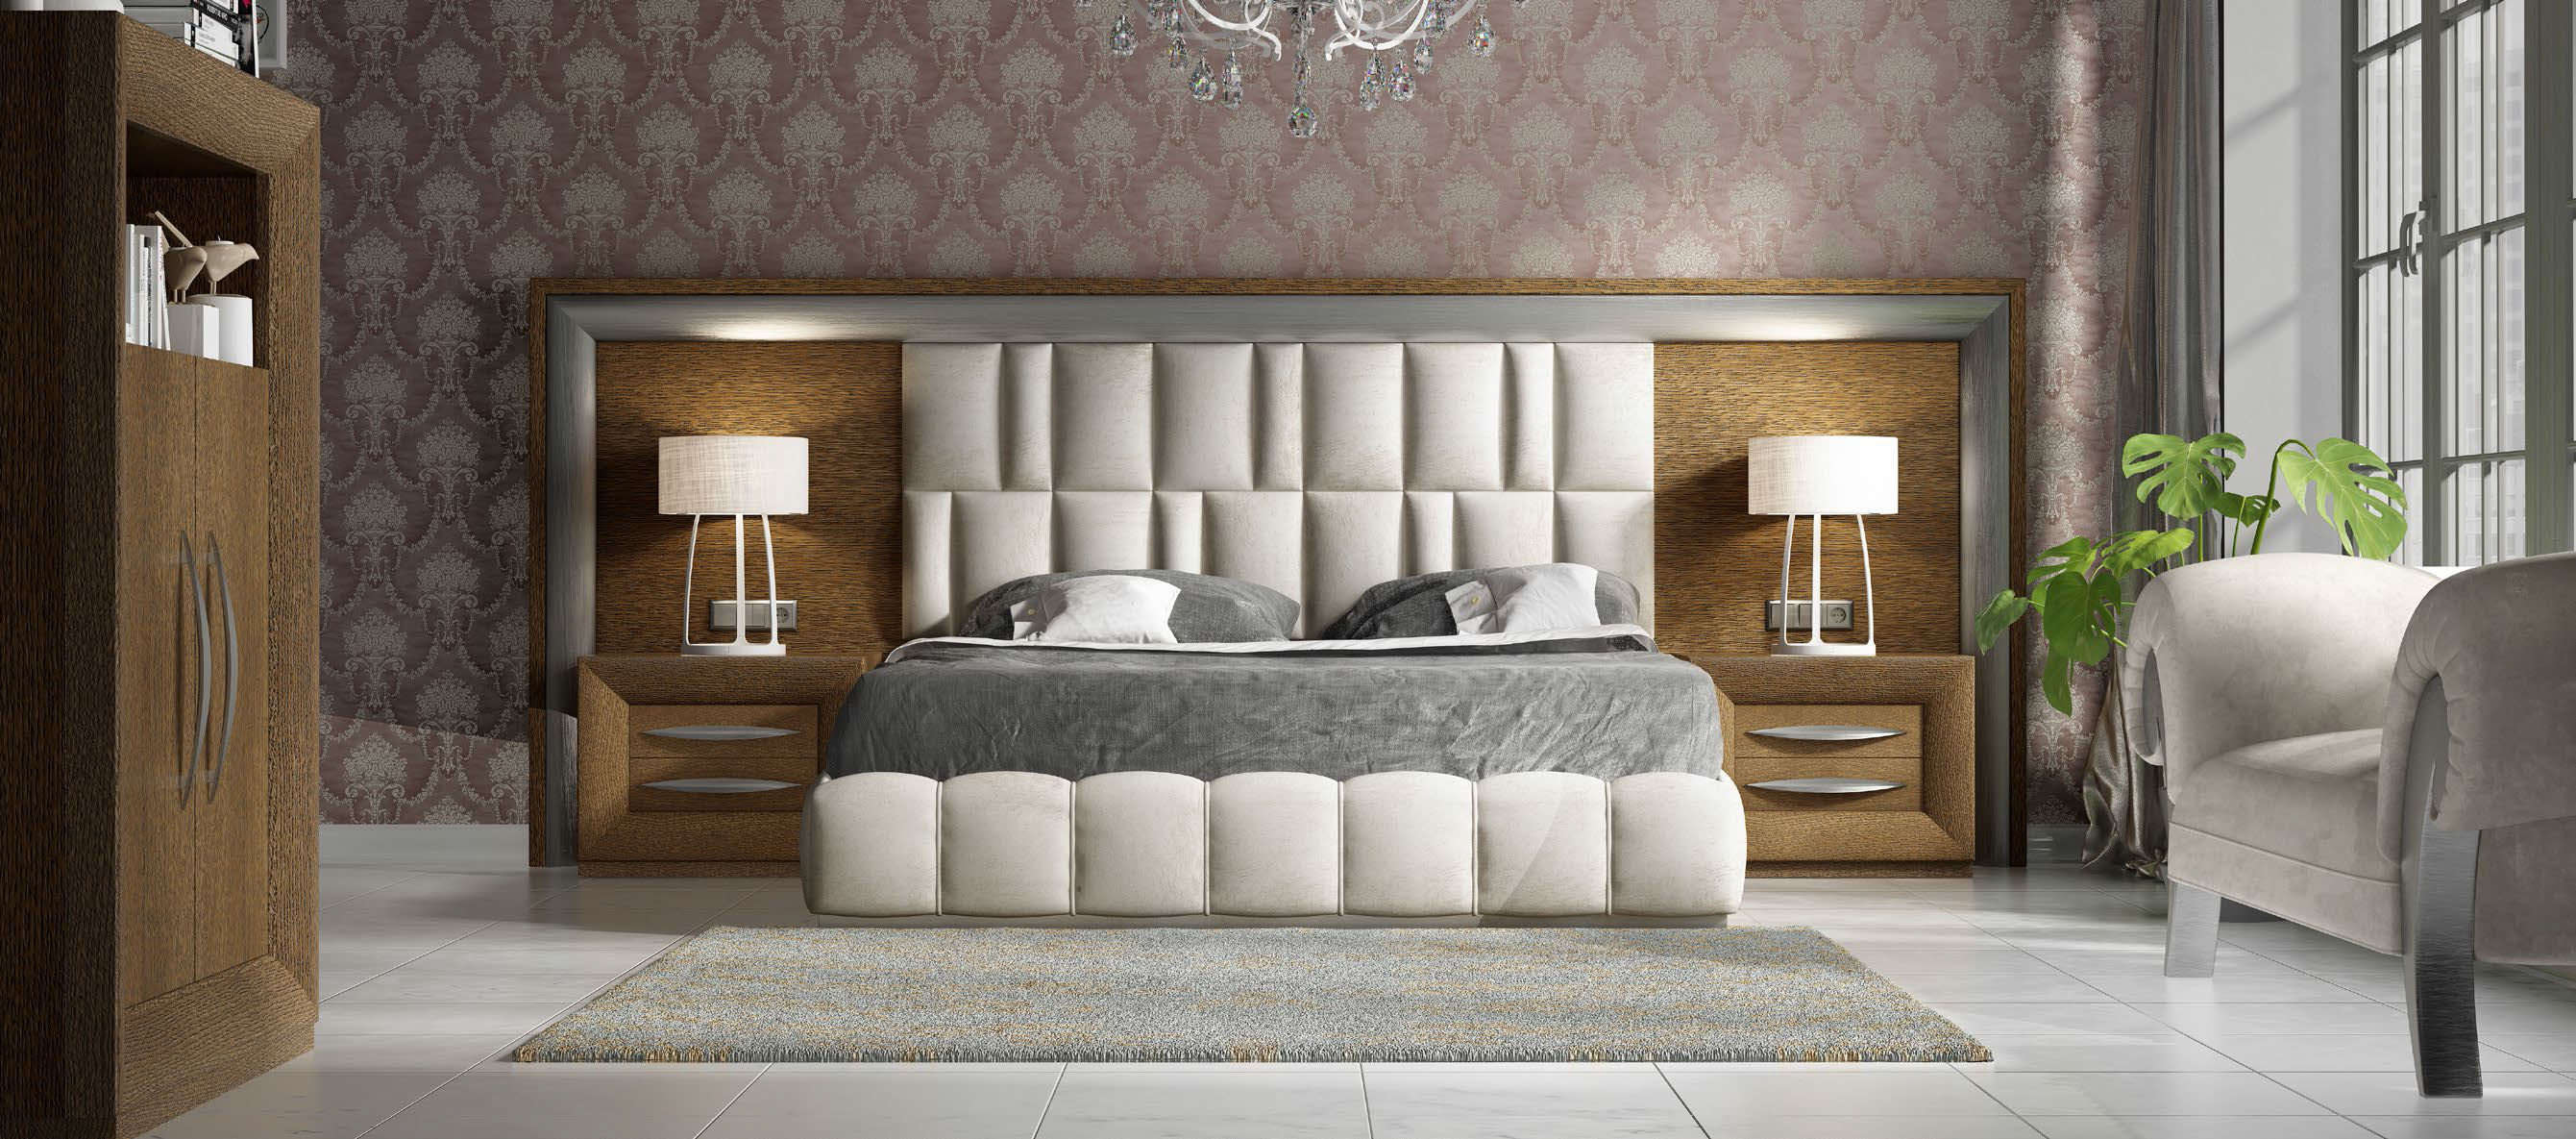 Brands Franco Furniture Bedrooms vol1, Spain DOR 116